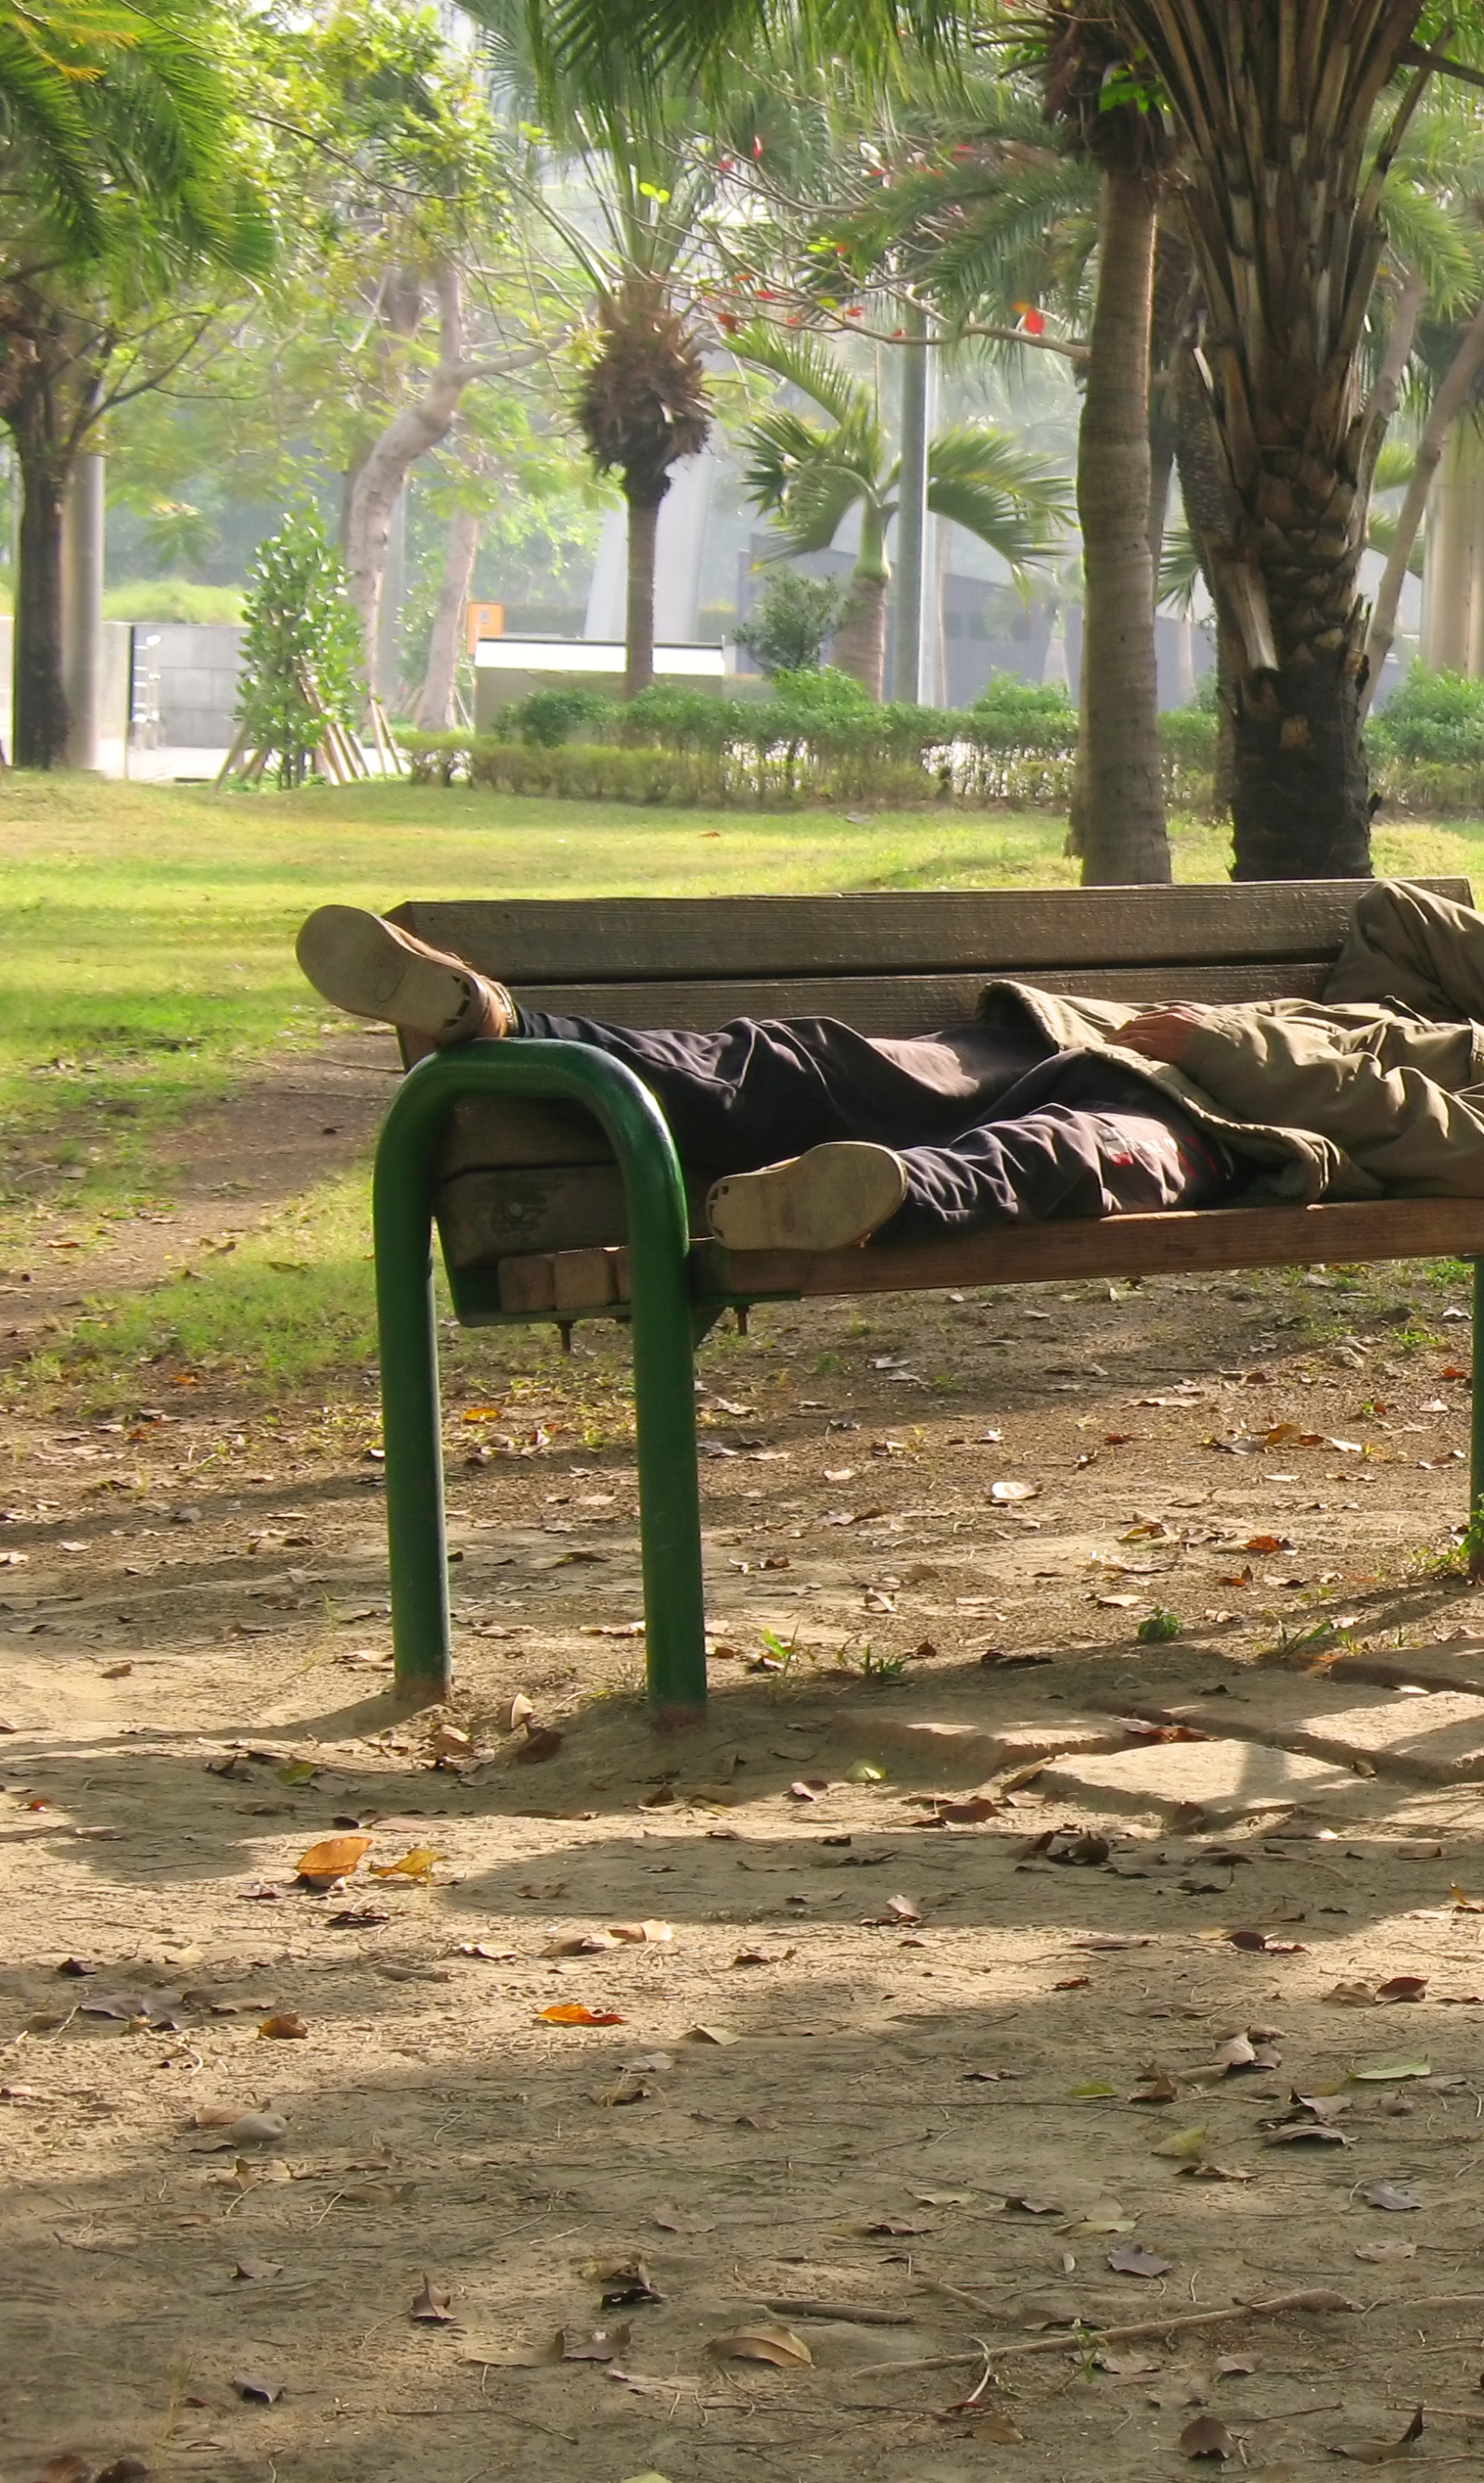 Homeless man photo